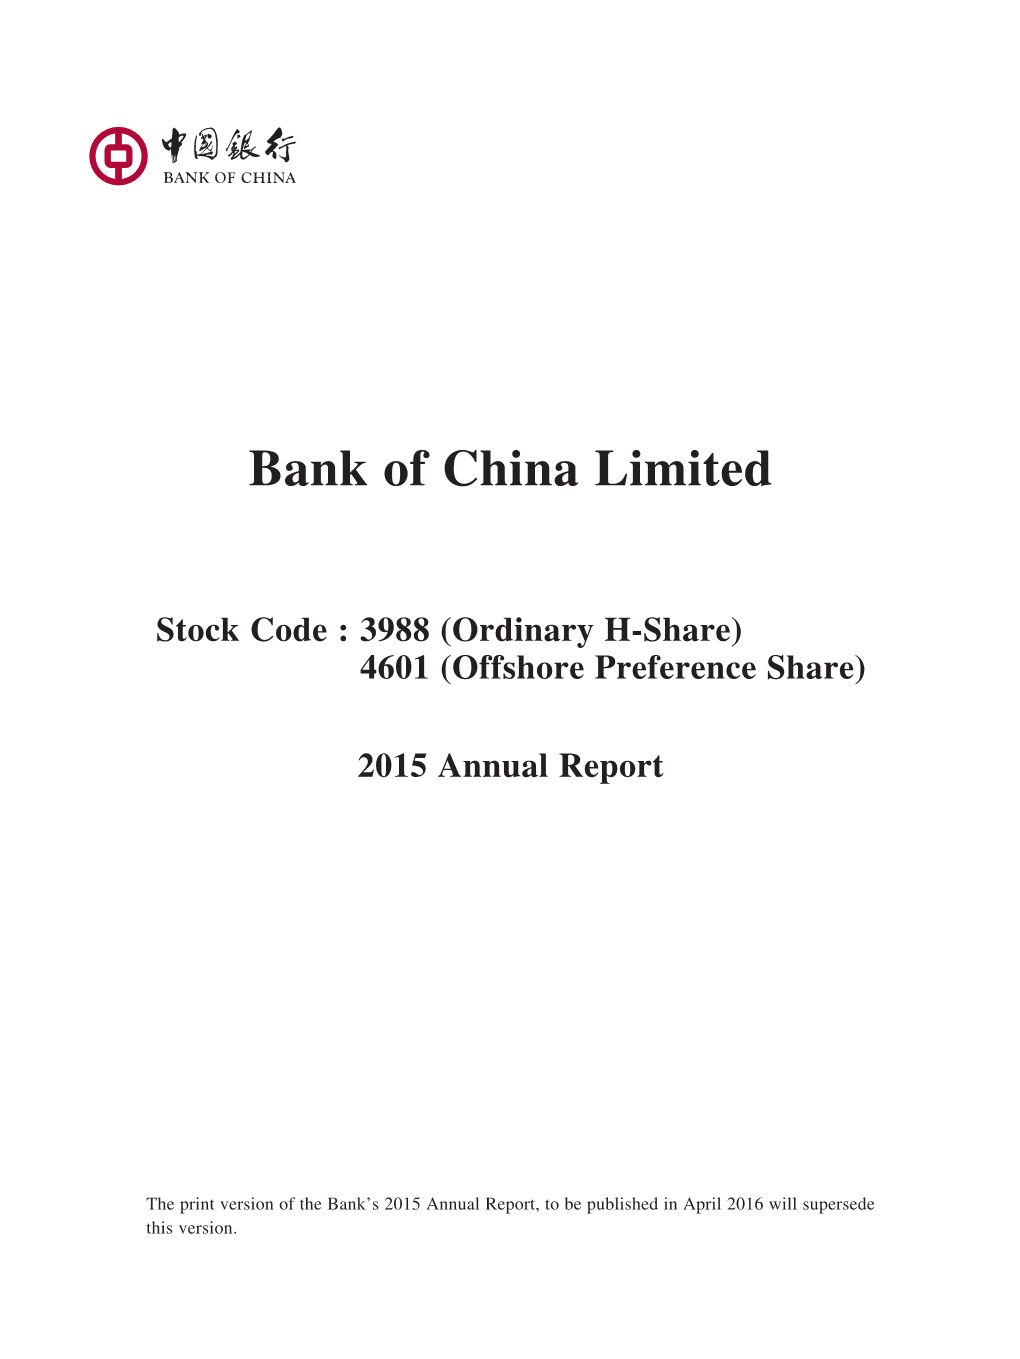 Bank of China Limited